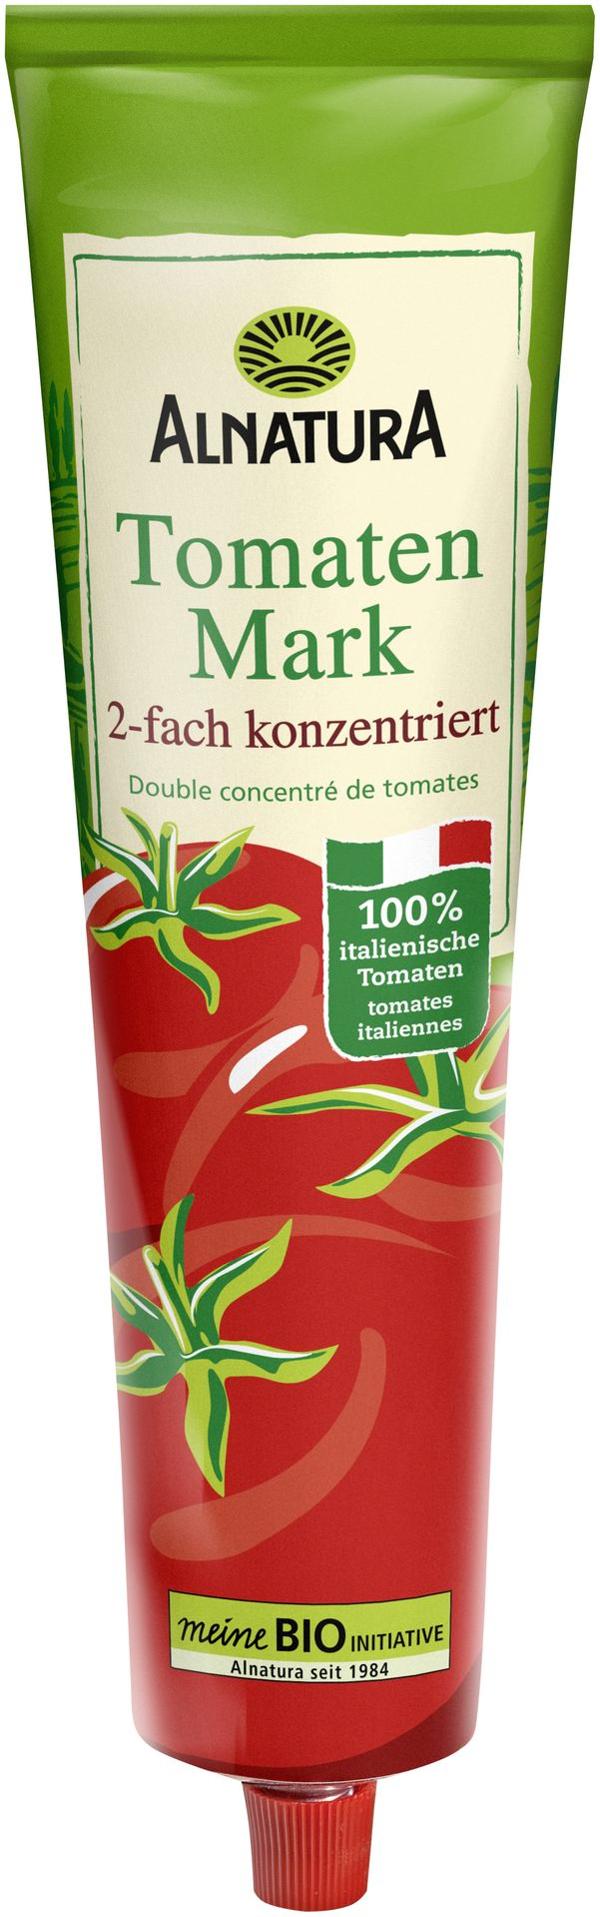 Produktfoto zu Tomatenmark in der Tube 200g Alnatura